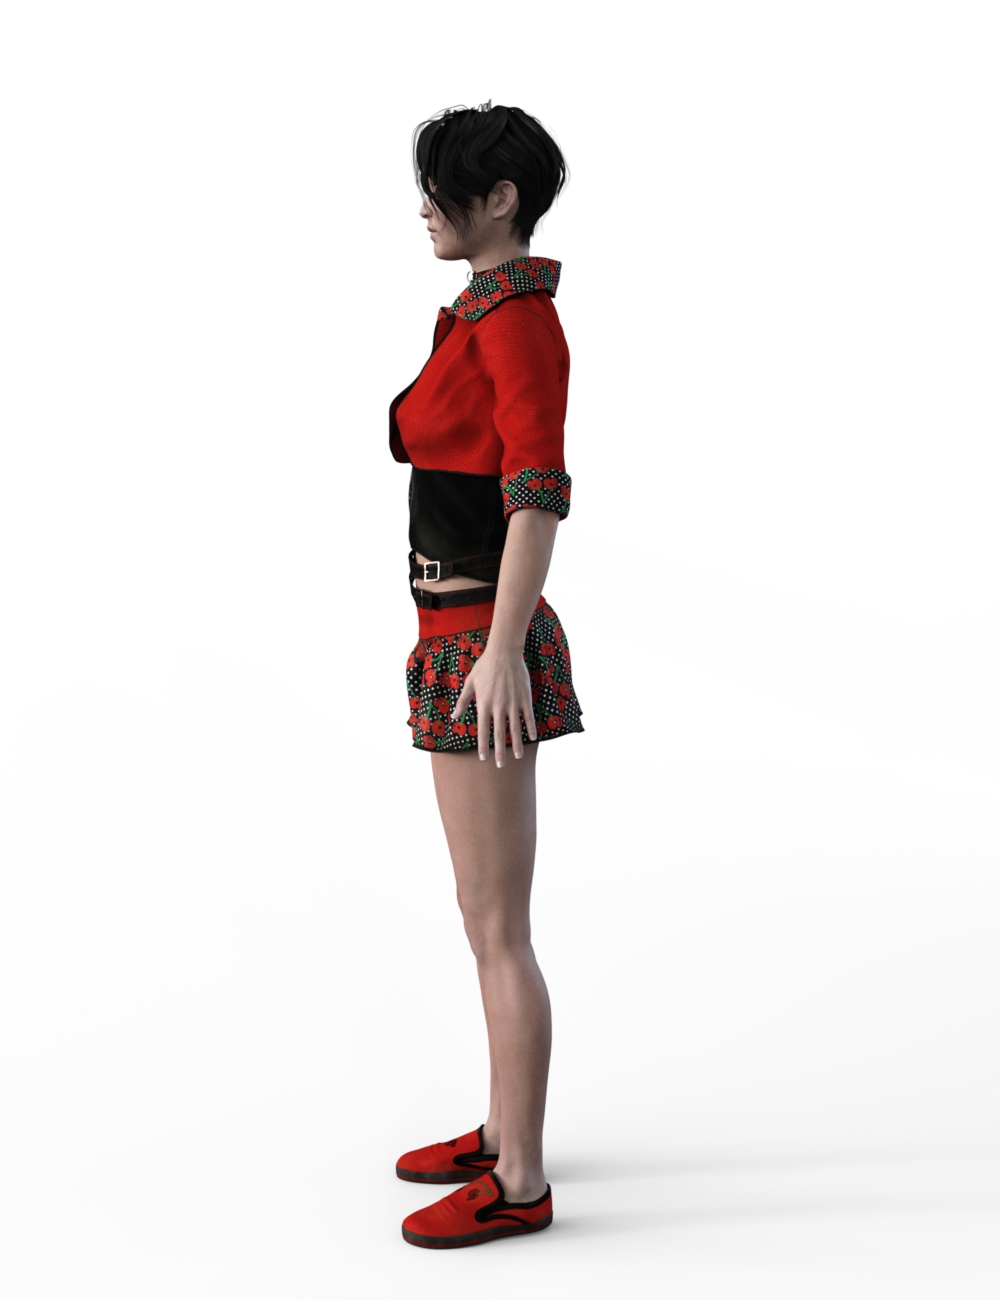 FBX- Mei Lin Cute Punk Outfit by: Paleo, 3D Models by Daz 3D